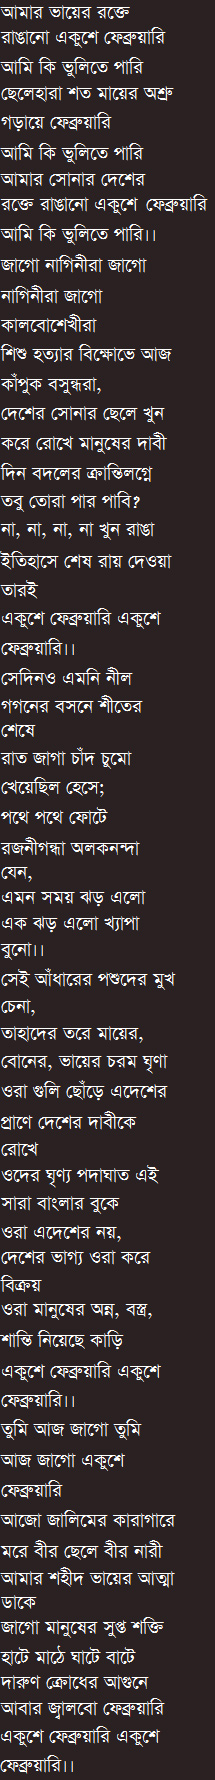 Bhasha Andolon Bangladesh Language Movement 1948 1952 Amar Bhaier Rokte Rangano Ekushey February History Of Bangladesh Lyrics and translationamar vaier rokte rangano. londoni worldwide limited